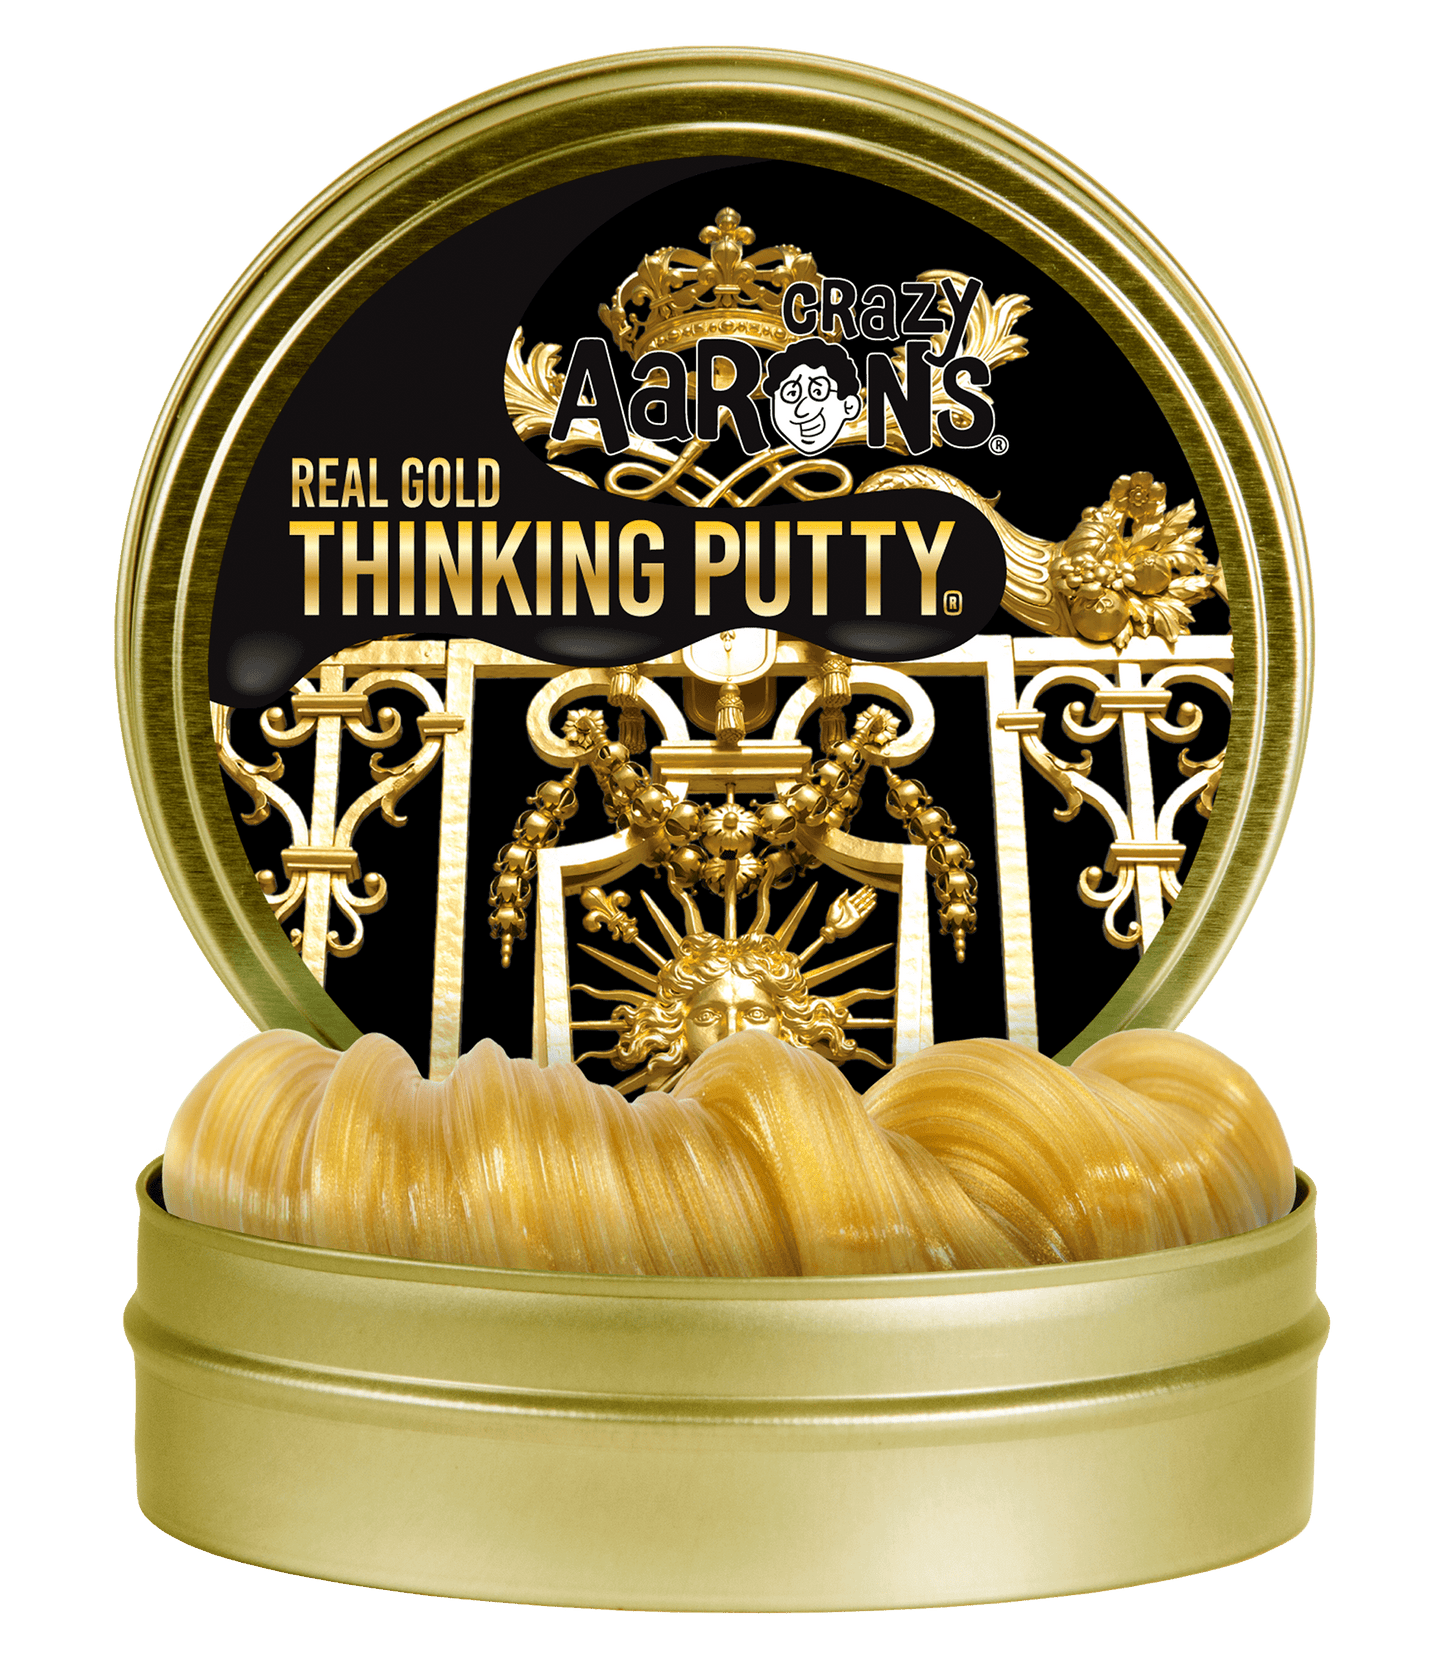 24 Karat Real Gold | Thinking Putty®